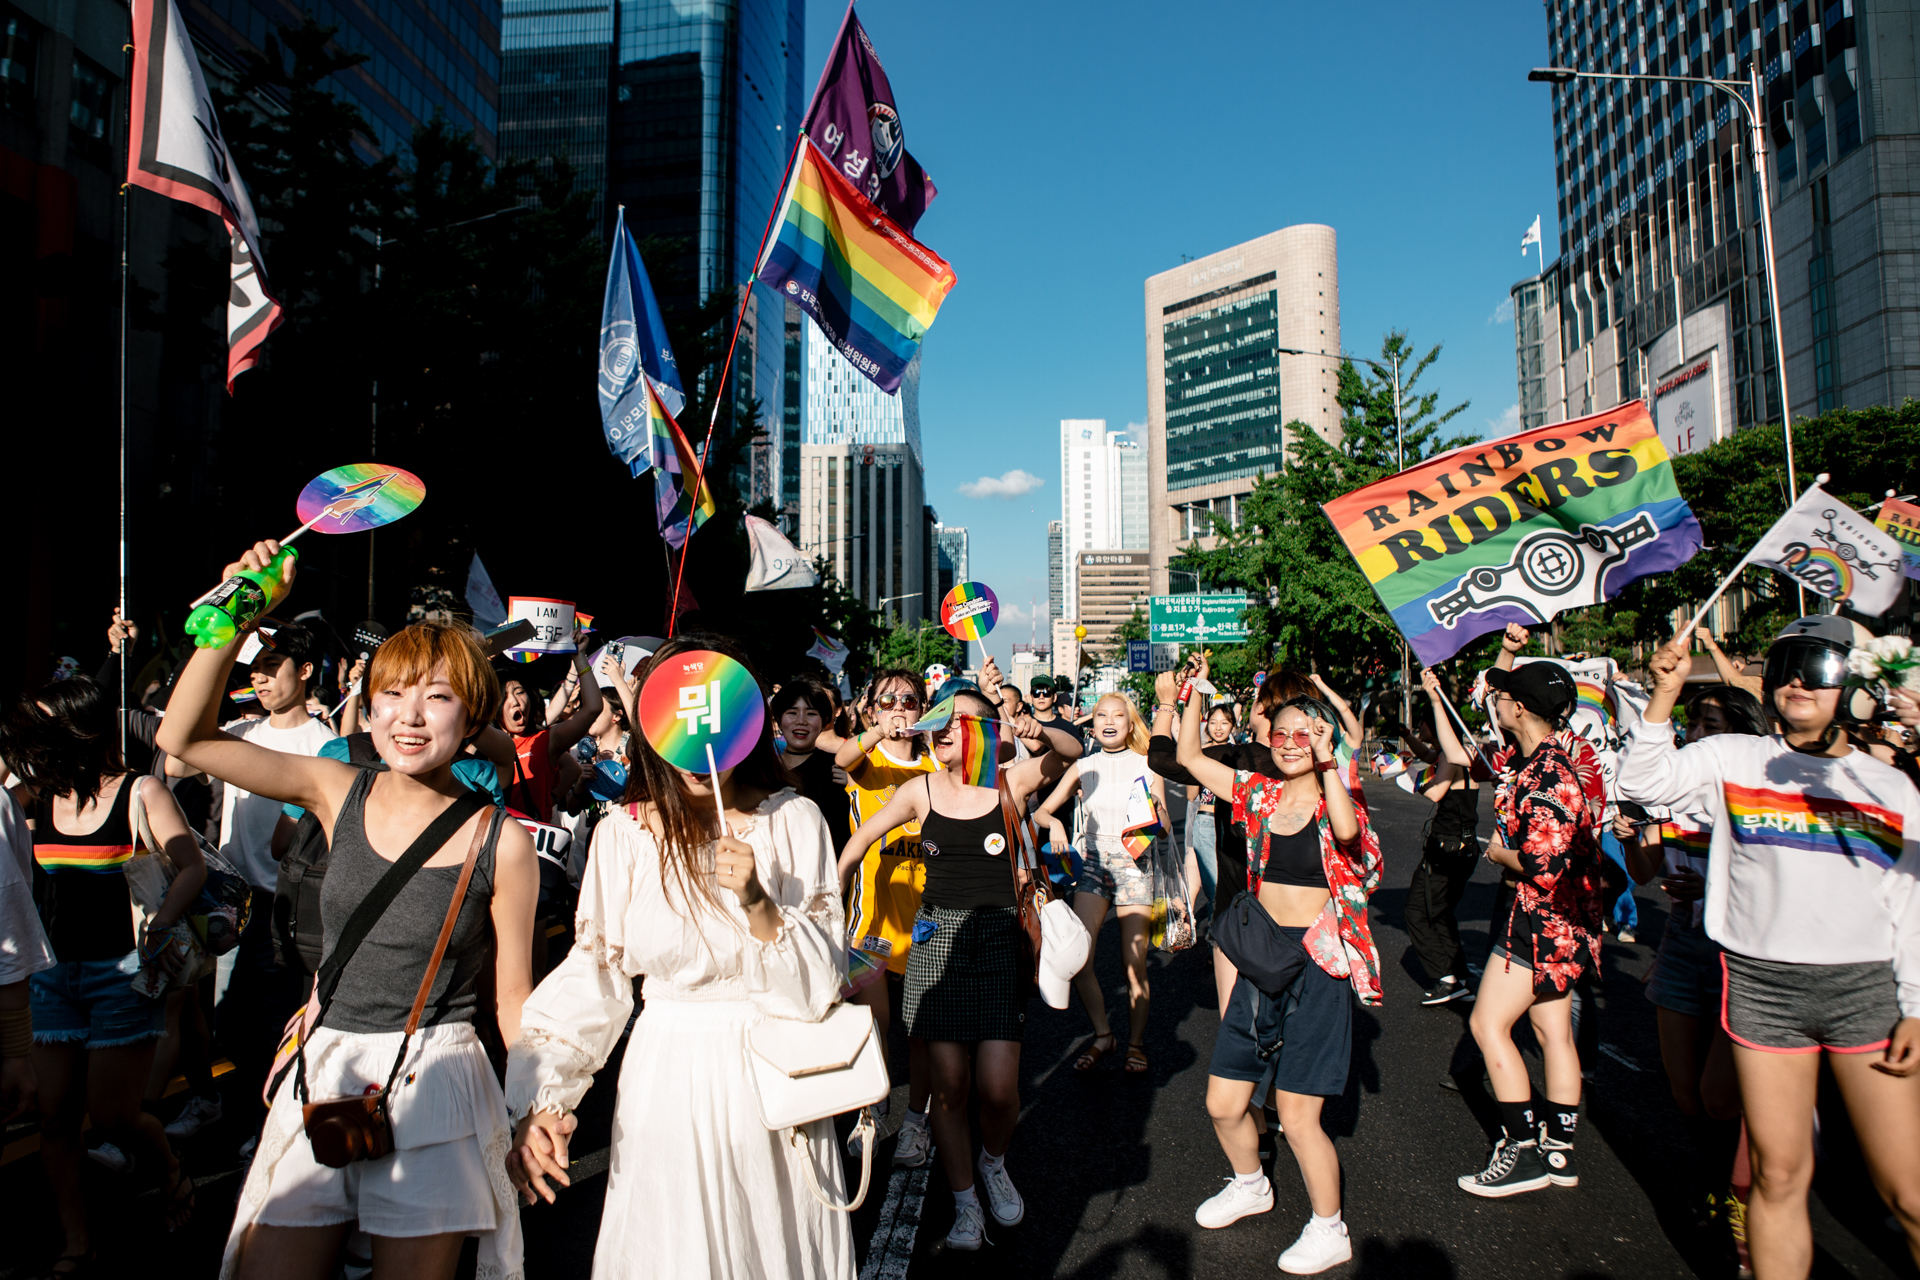 Seoul Queer Pride 2018, South Korea (2018)